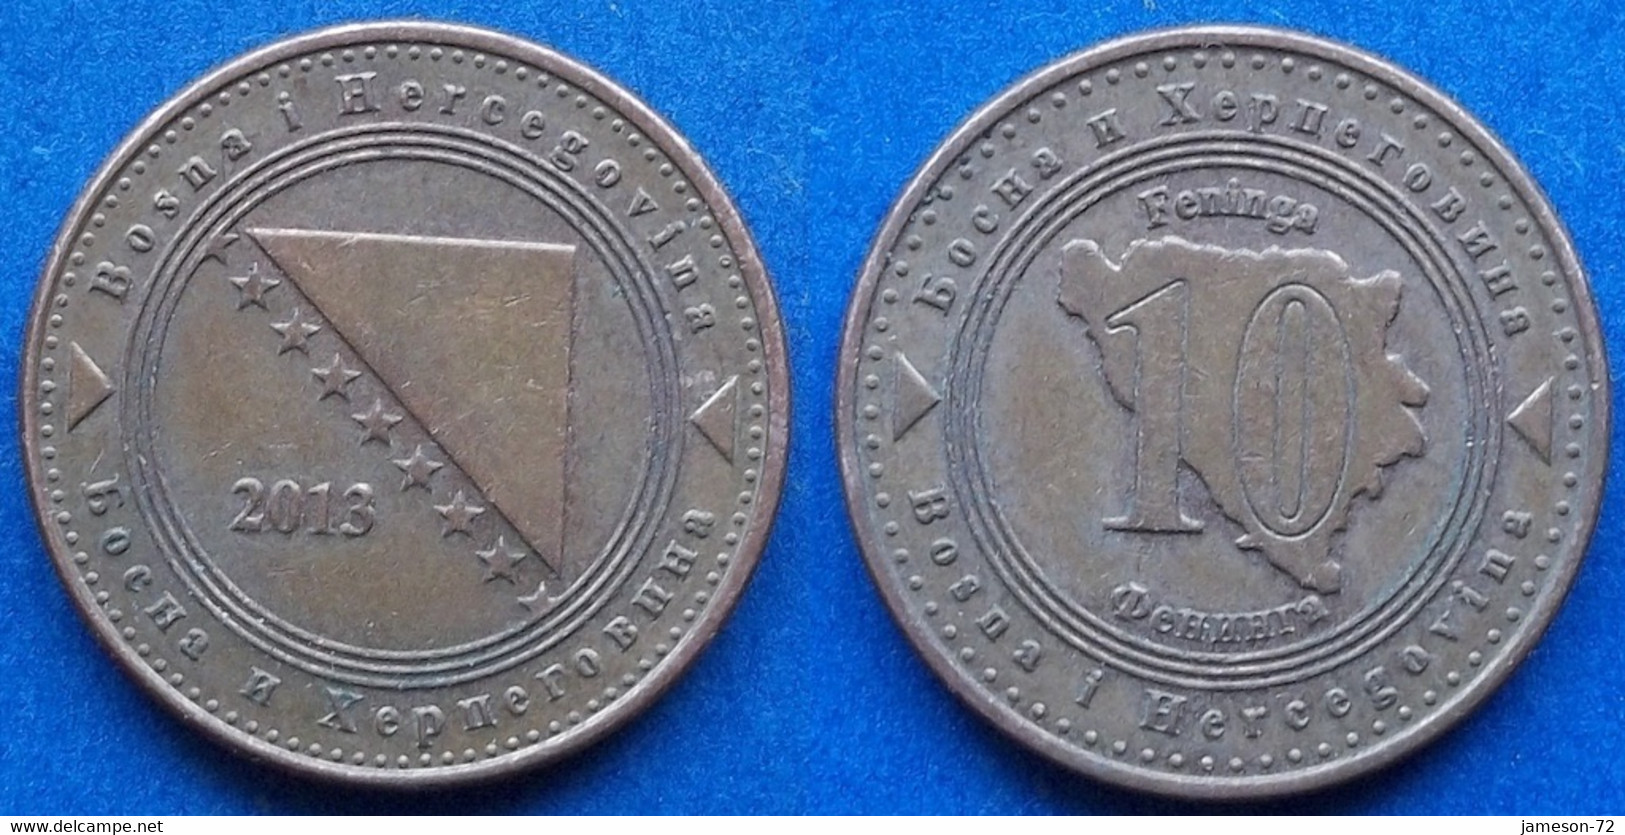 BOSNIA-HERZEGOVINA - 10 Feninga 2013 KM# 115 Federal Republic - Edelweiss Coins - Bosnia Y Herzegovina